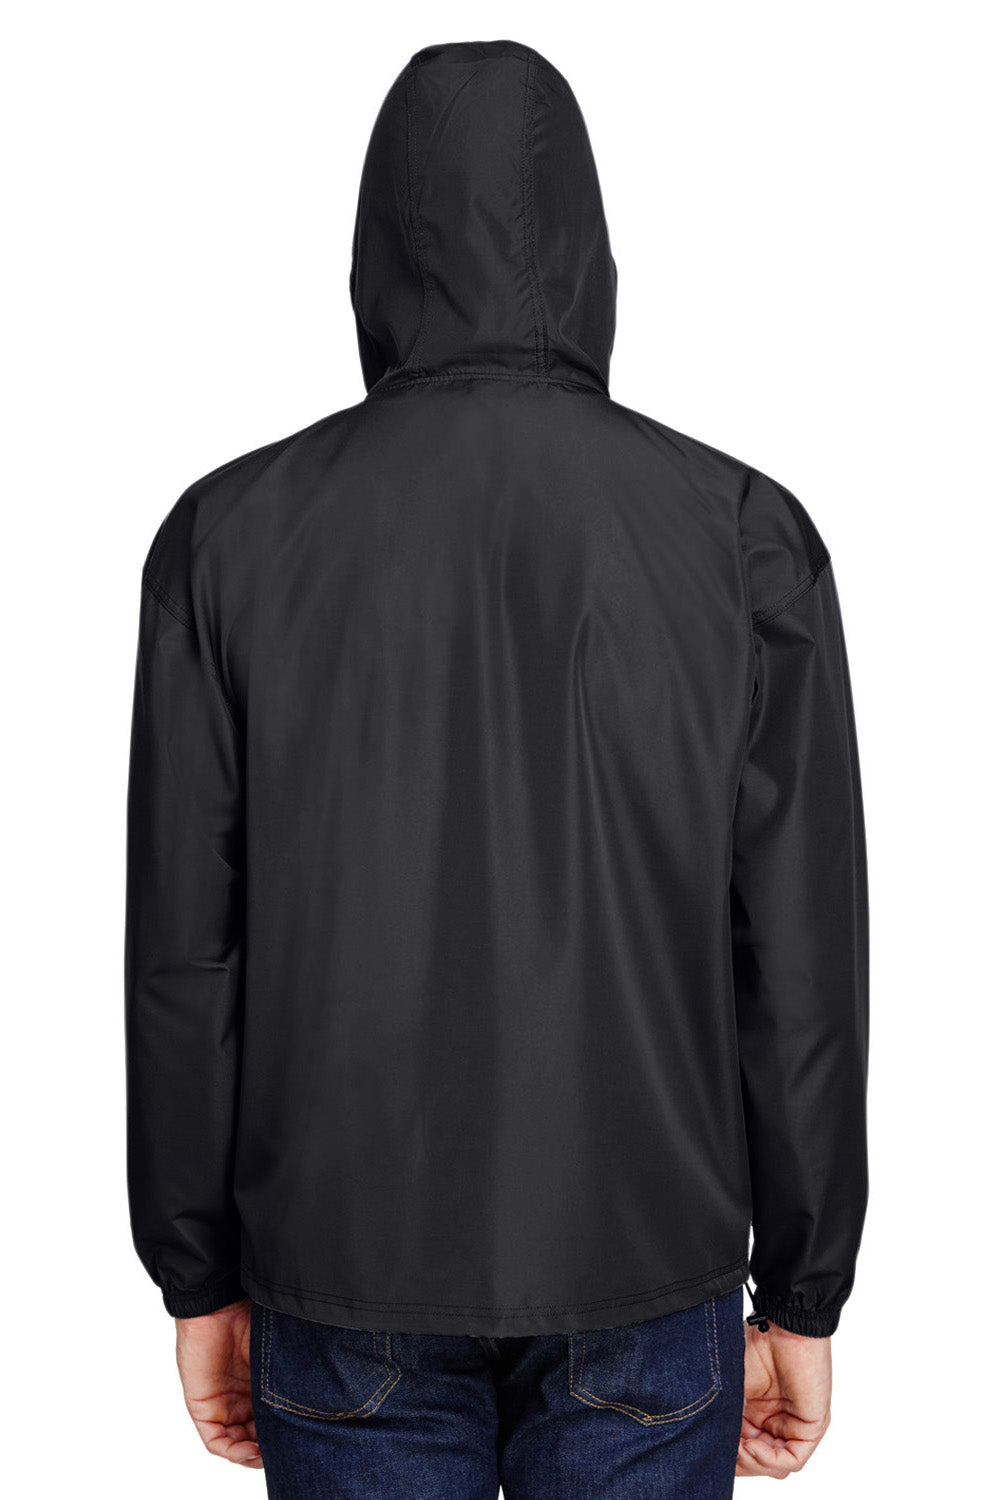 Champion CO200 Mens Packable Anorak 1/4 Zip Hooded Jacket Black Back